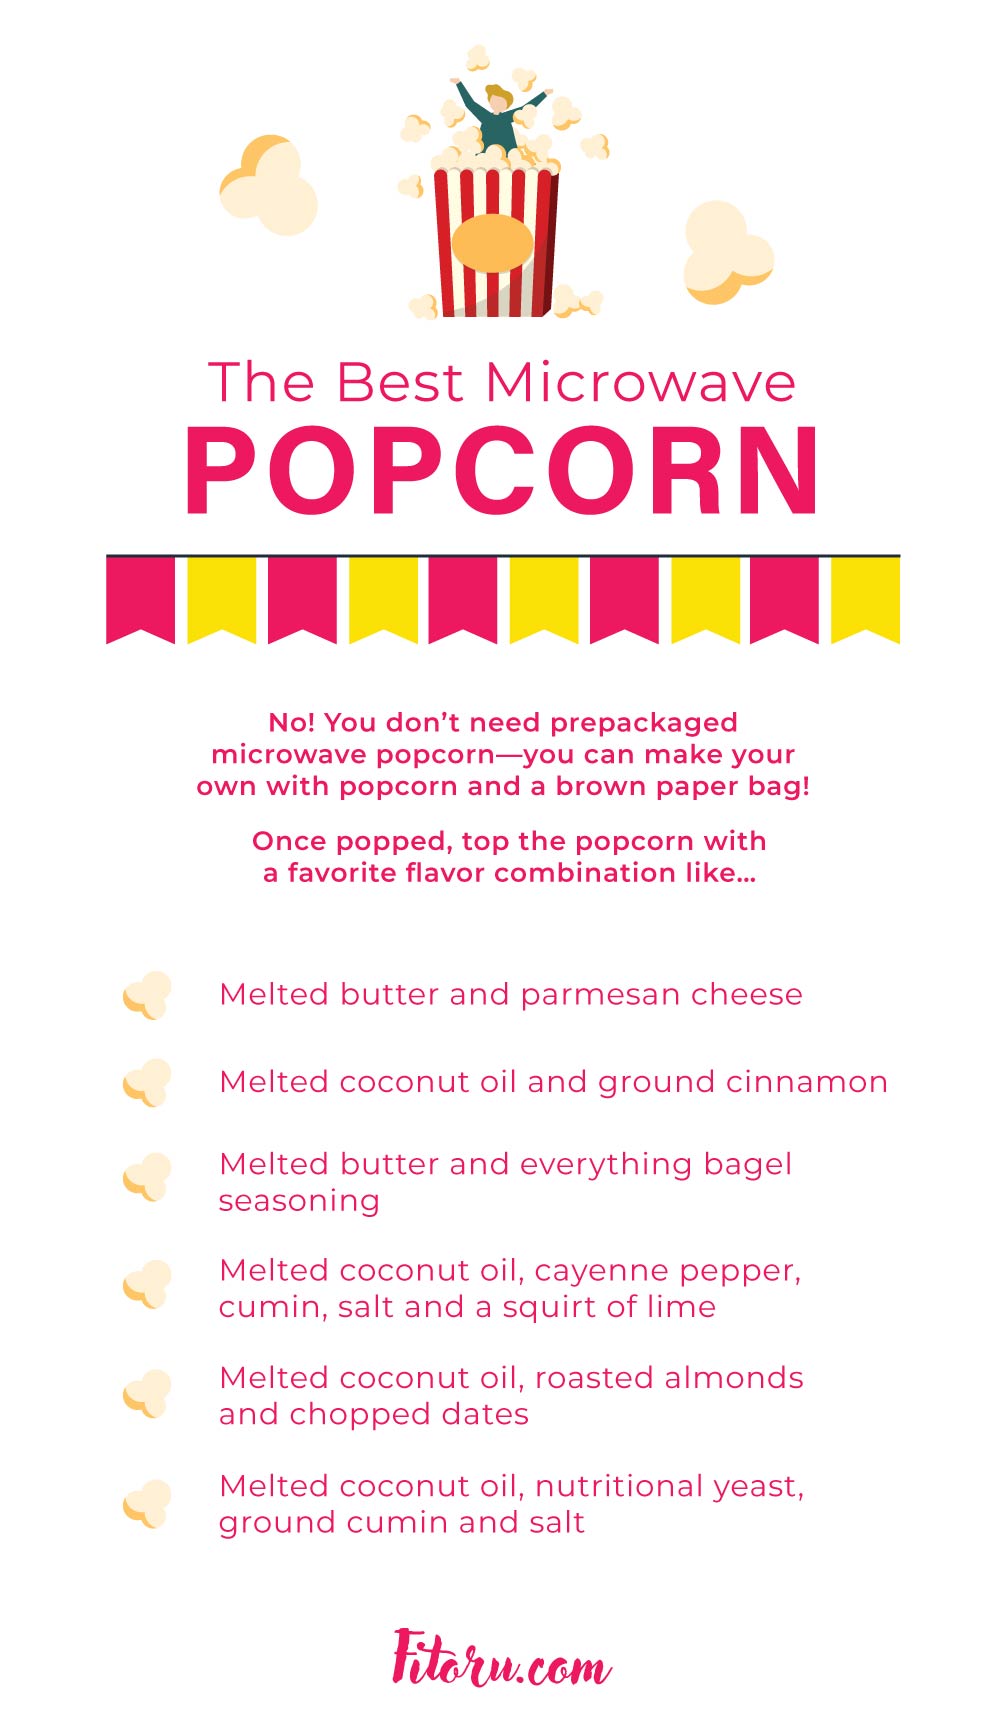 The Best Microwave Popcorn.